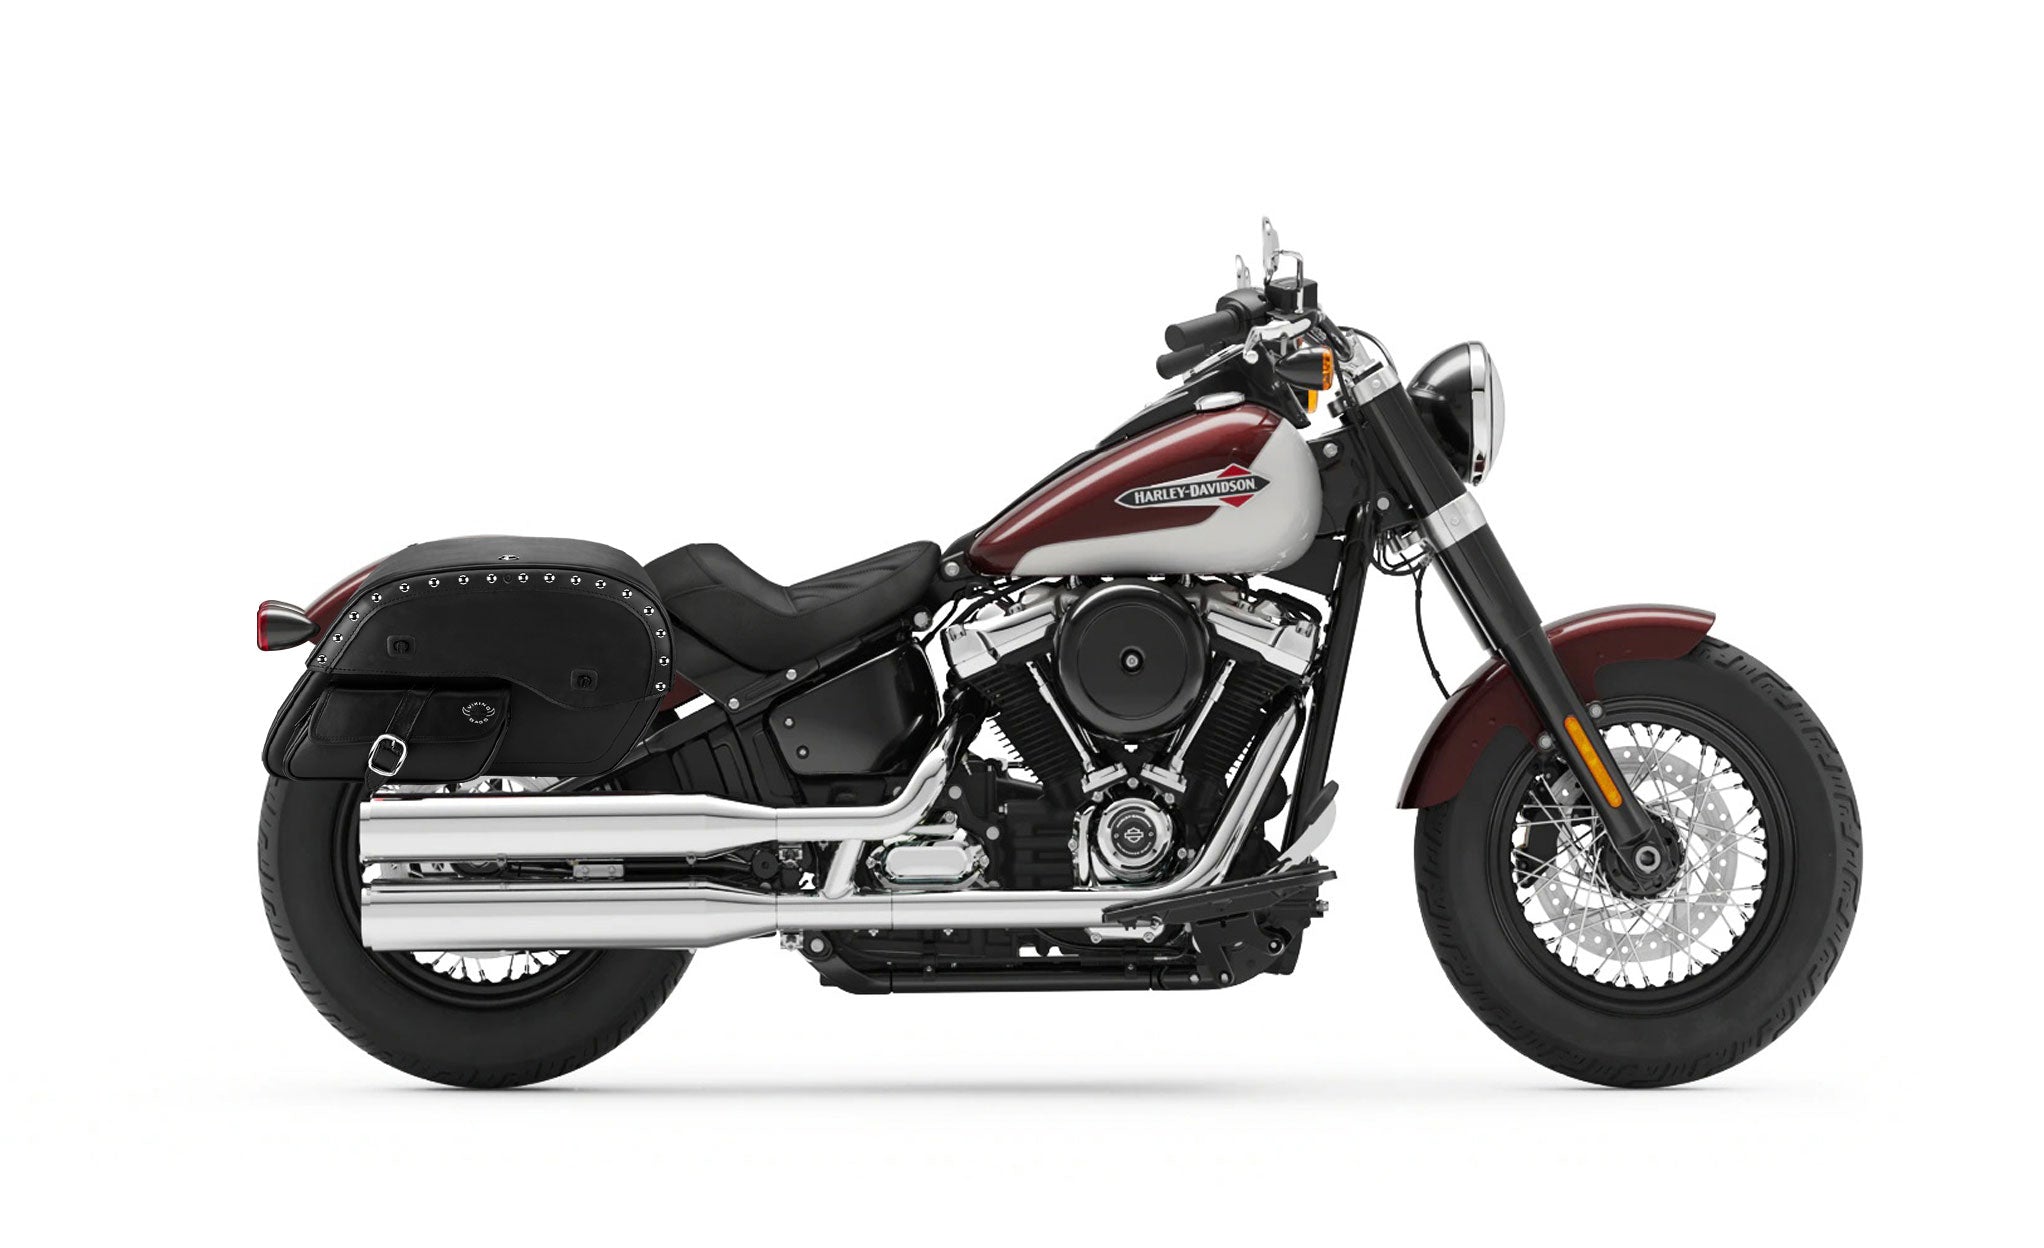 Viking Side Pocket Large Studded Leather Motorcycle Saddlebags for Harley Softail Slim Bag on Bike View @expand